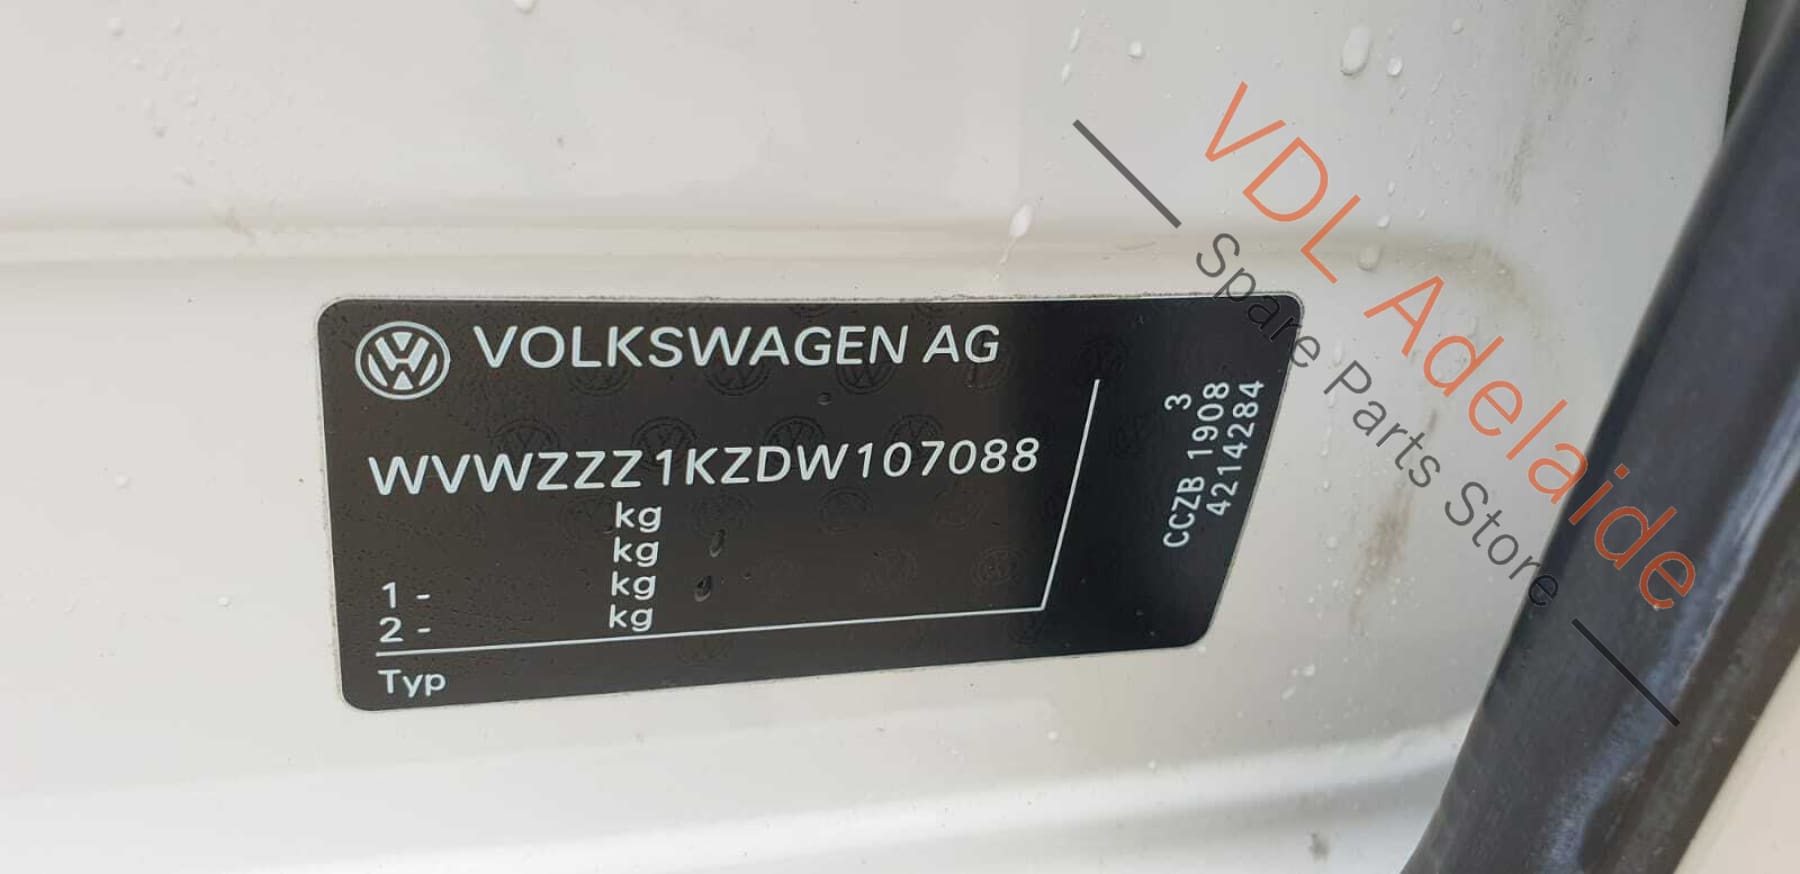 Volkswagen VW Golf GTi Mk6 Lambda Probe Exhaust O2 Sensor 06J906262K NOR4